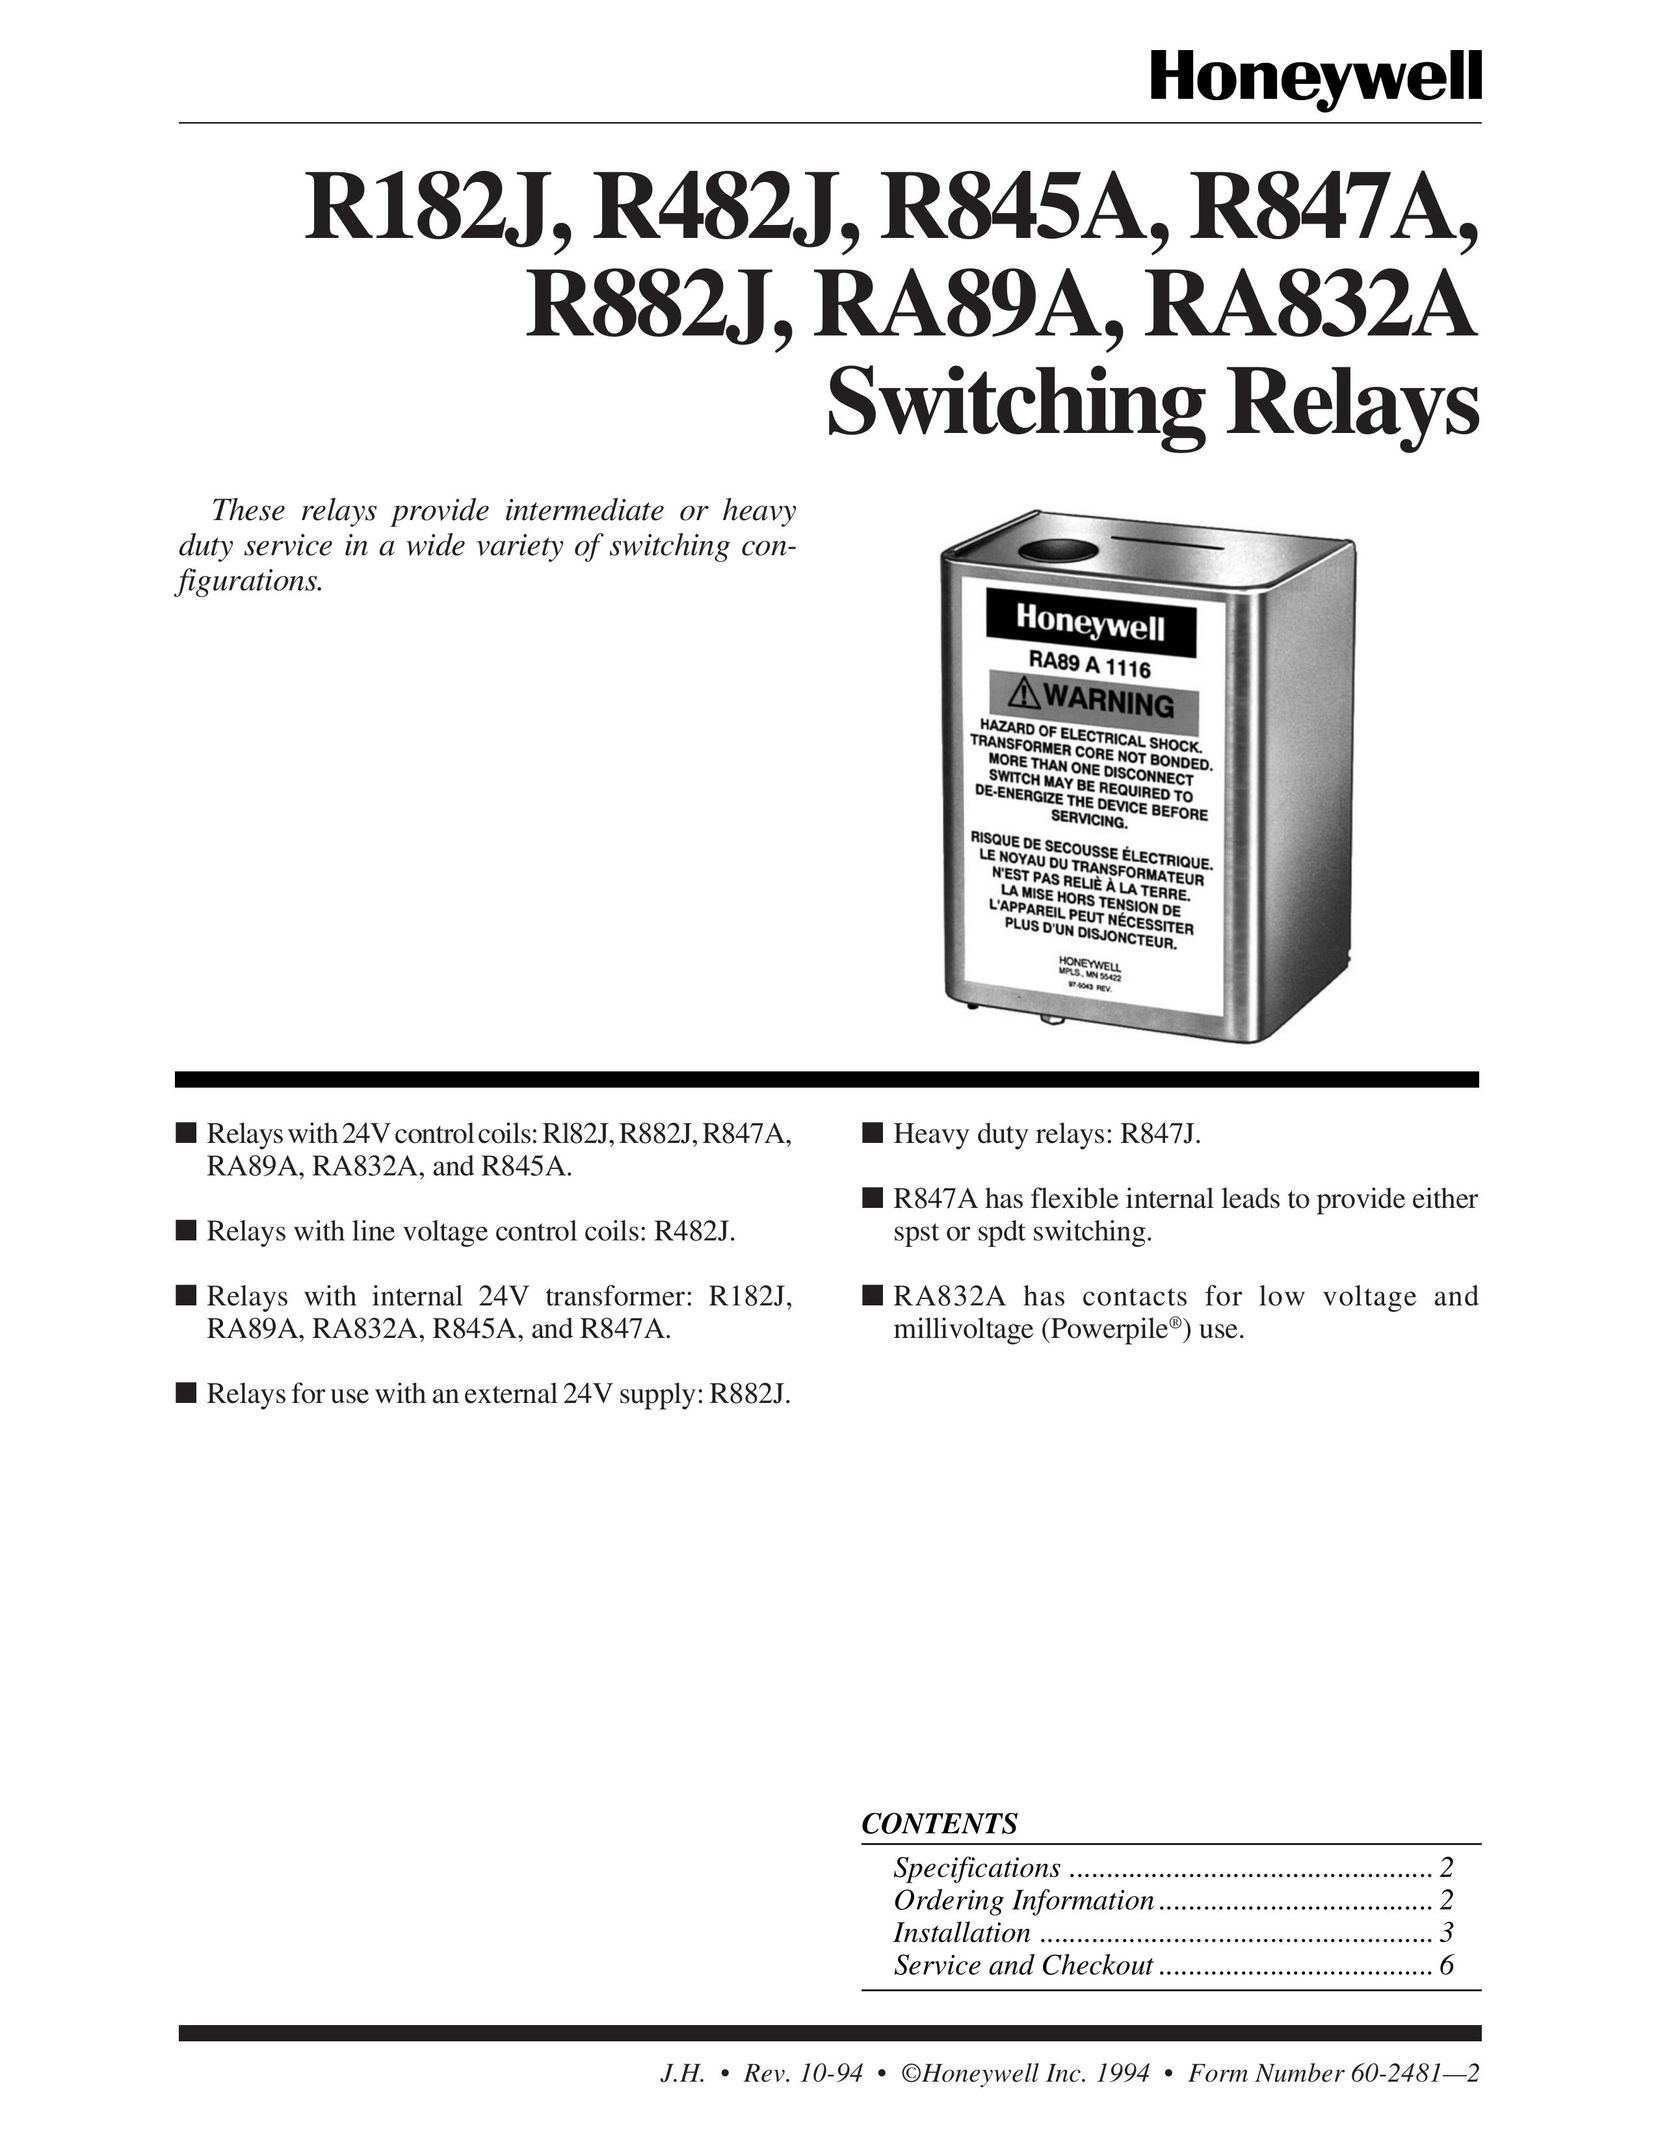 Honeywell RA832A Switch User Manual